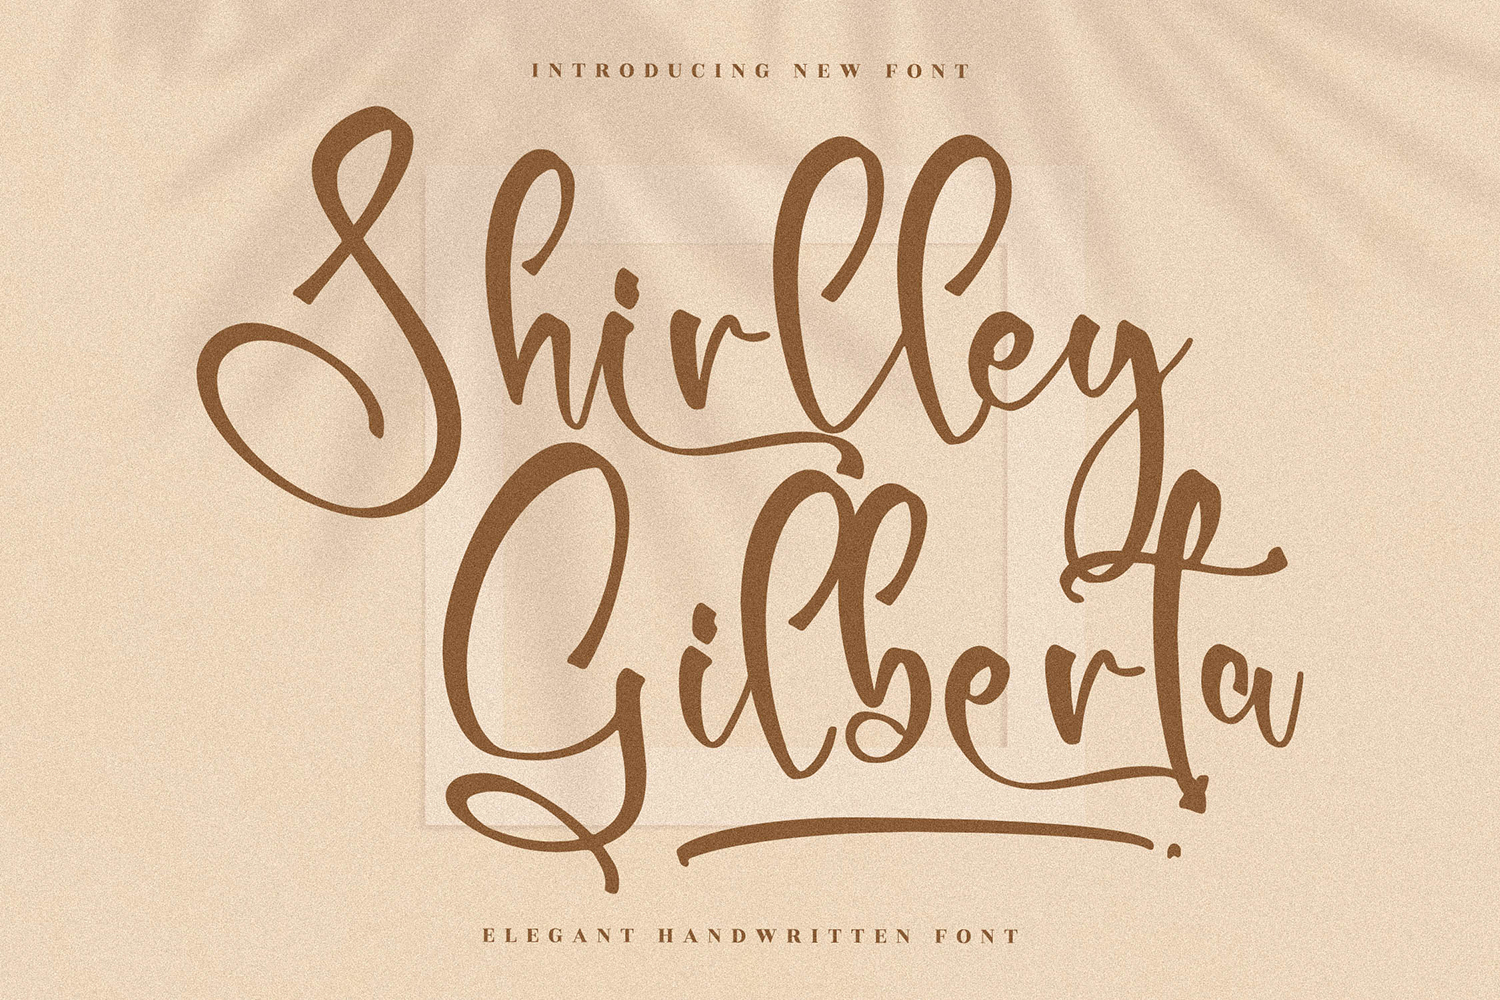 Shirlley Gilberta Free Font